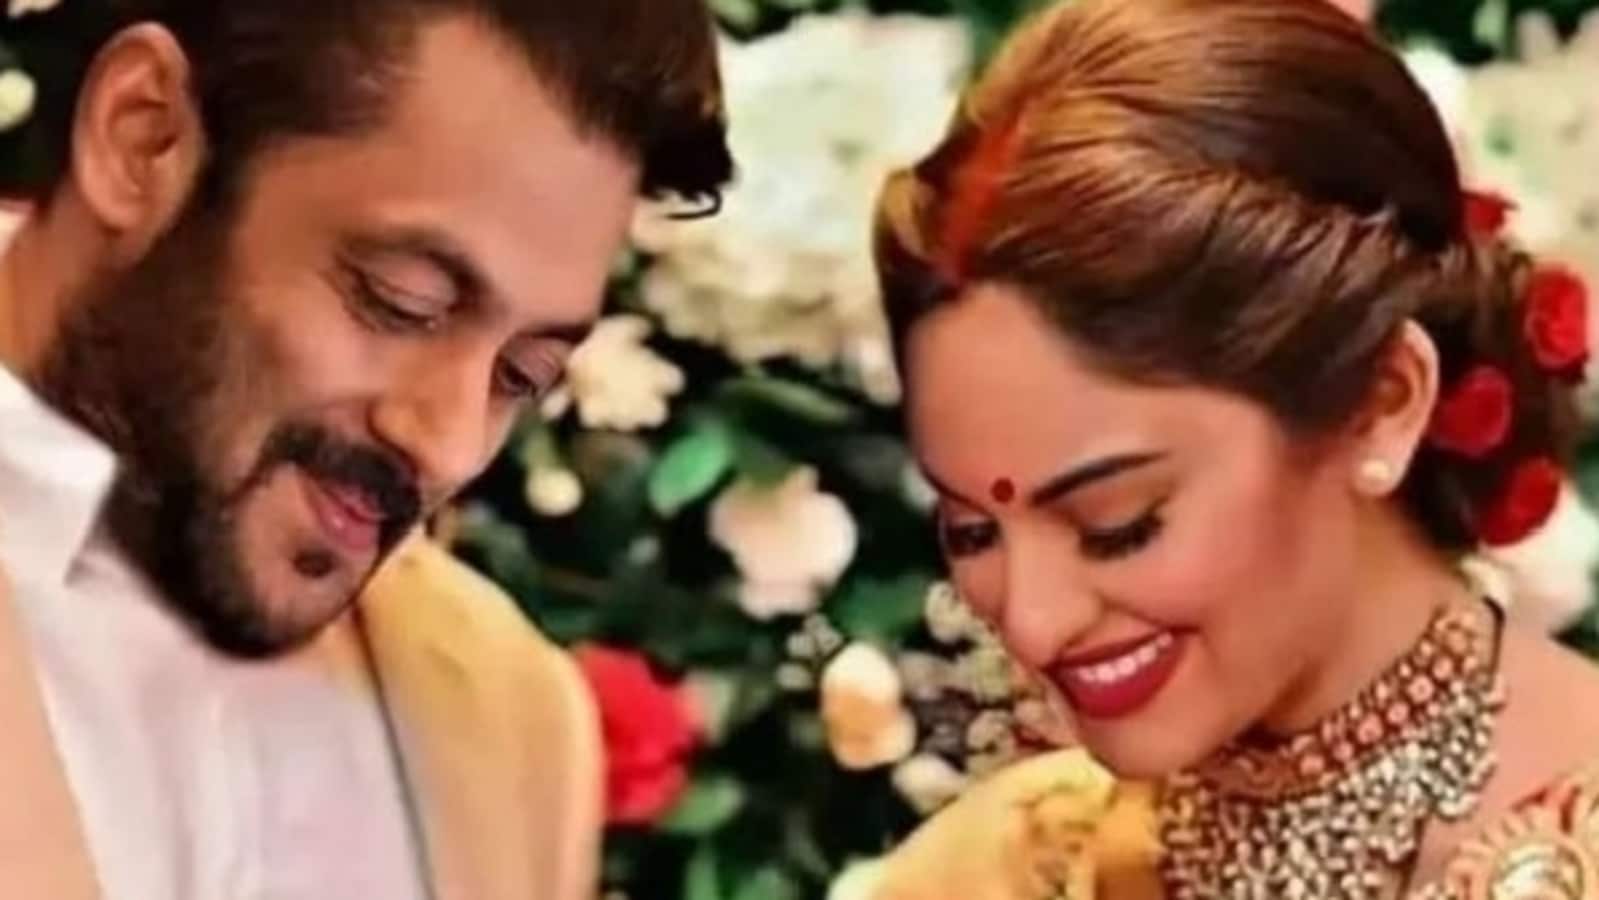 Chudai Ki Video Gana Salman Khan - Salman, Sonakshi's fans are confused as fake pic shows them as a married  couple | Bollywood - Hindustan Times